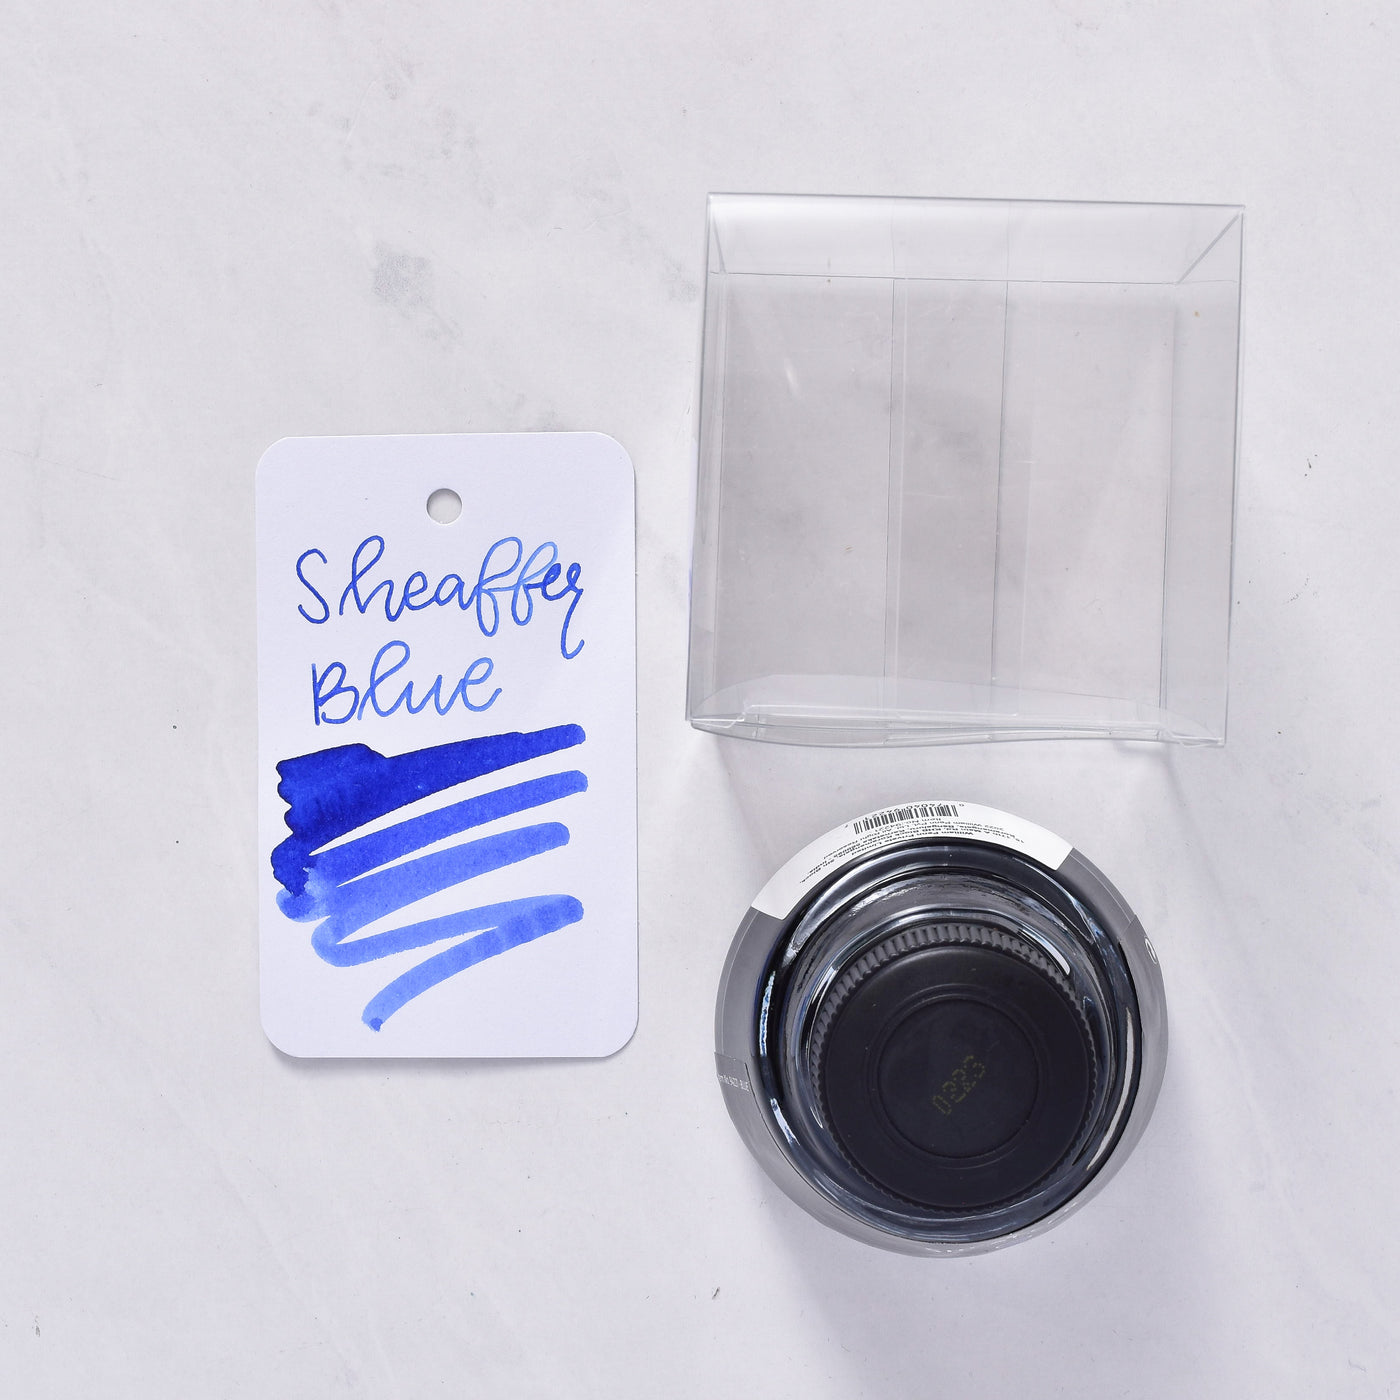 Sheaffer Blue Ink Bottle